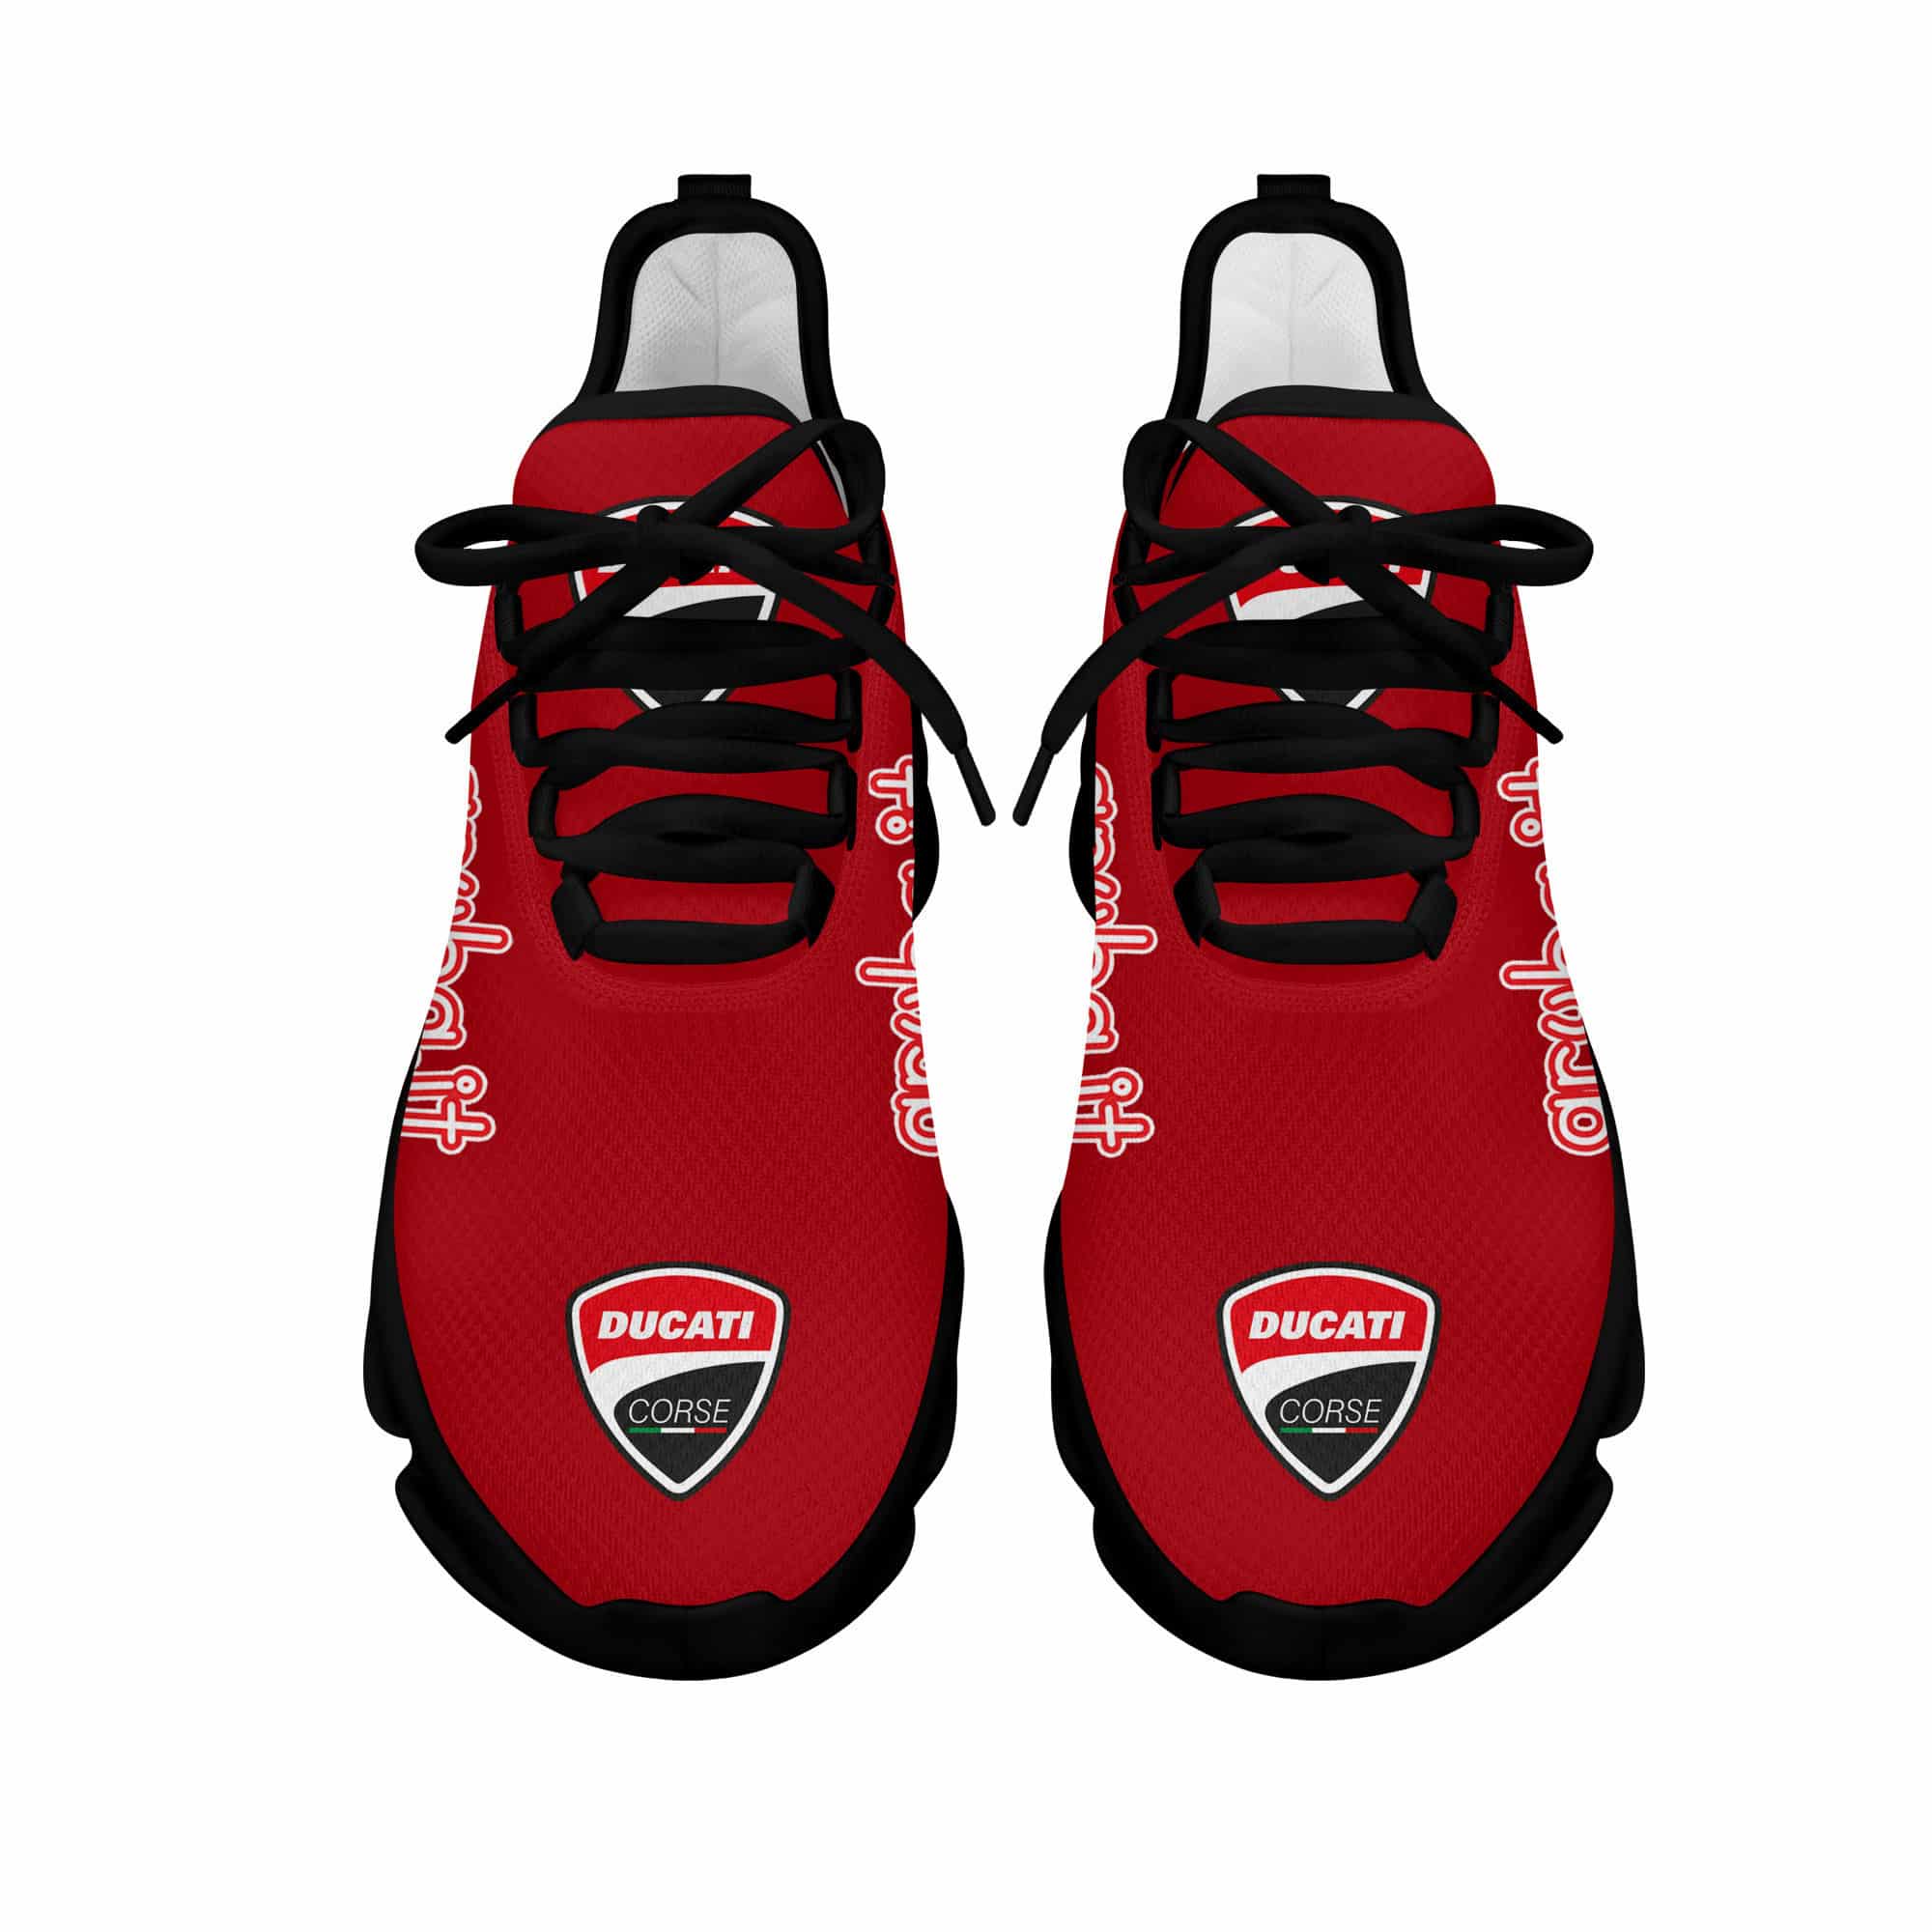 Ducati Racing Running Shoes Max Soul Shoes Sneakers Ver 5 3